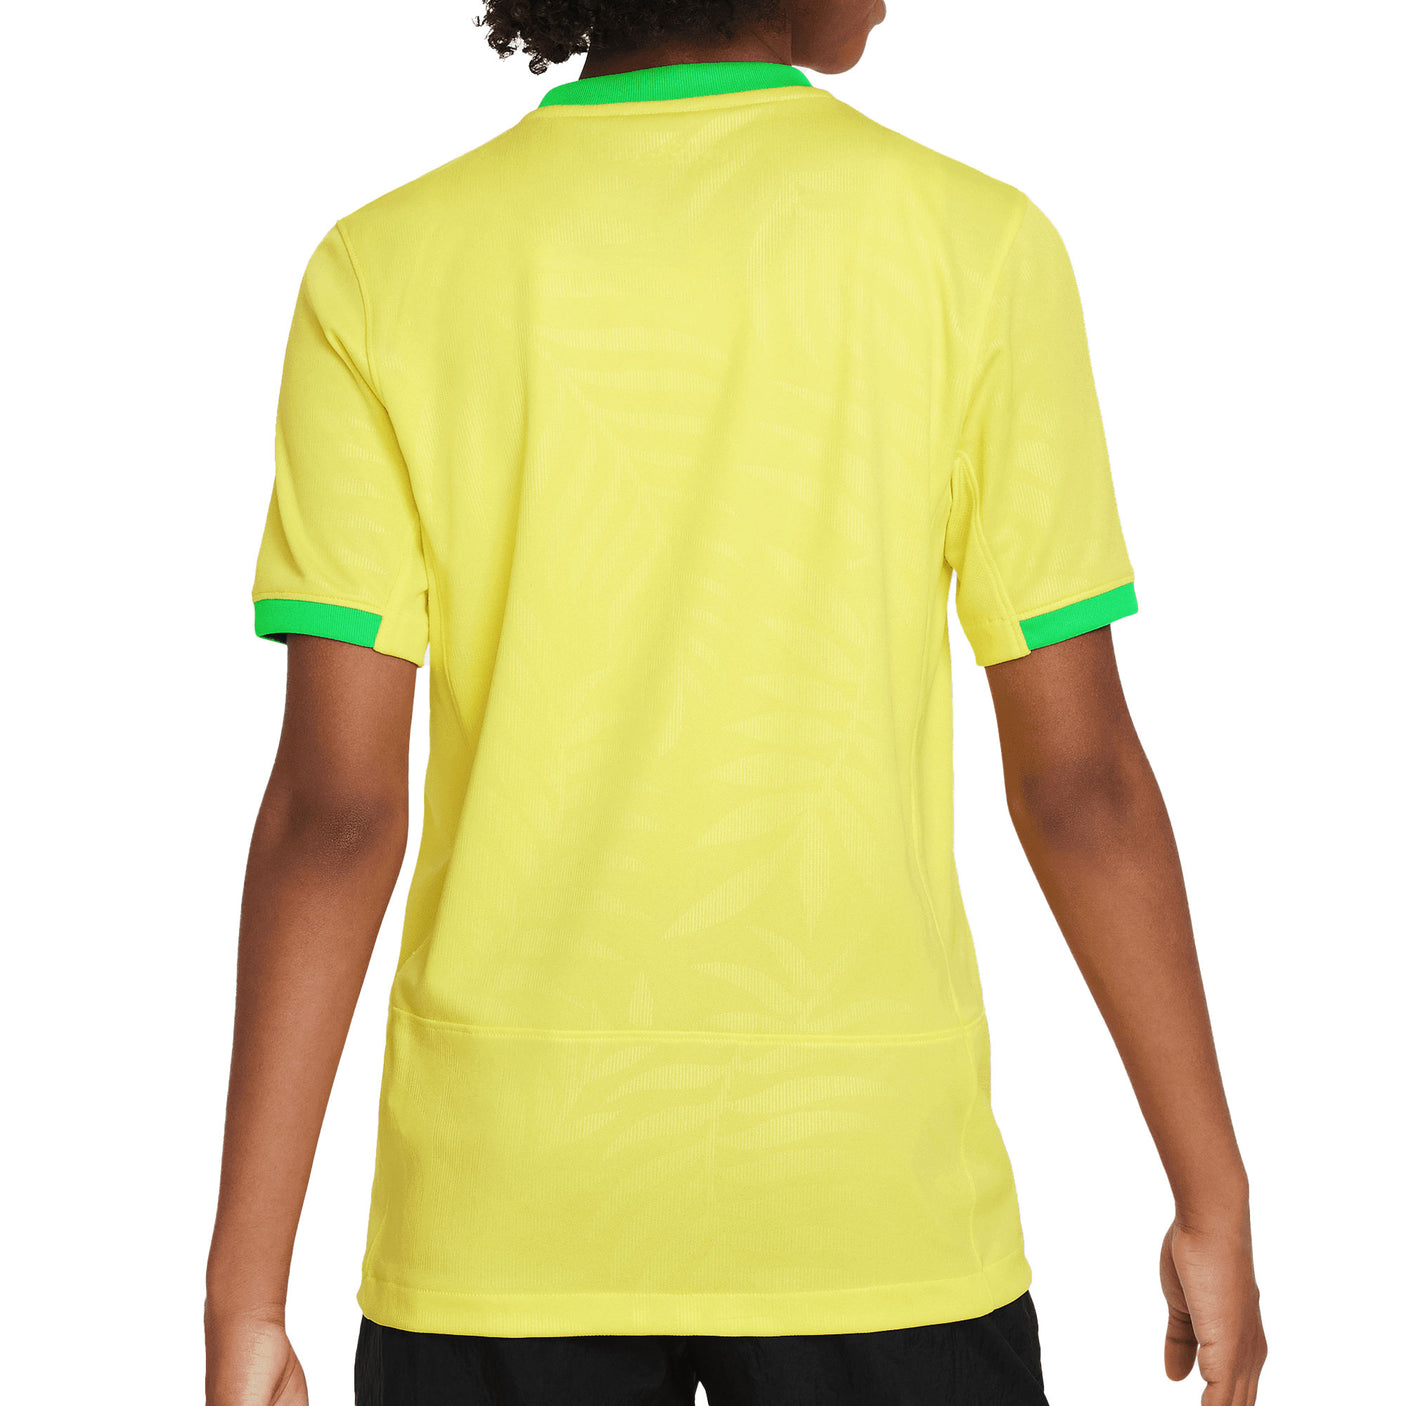 Brazil National Soccer Team Nike Warm Up Soccer Jacket, Size Youth